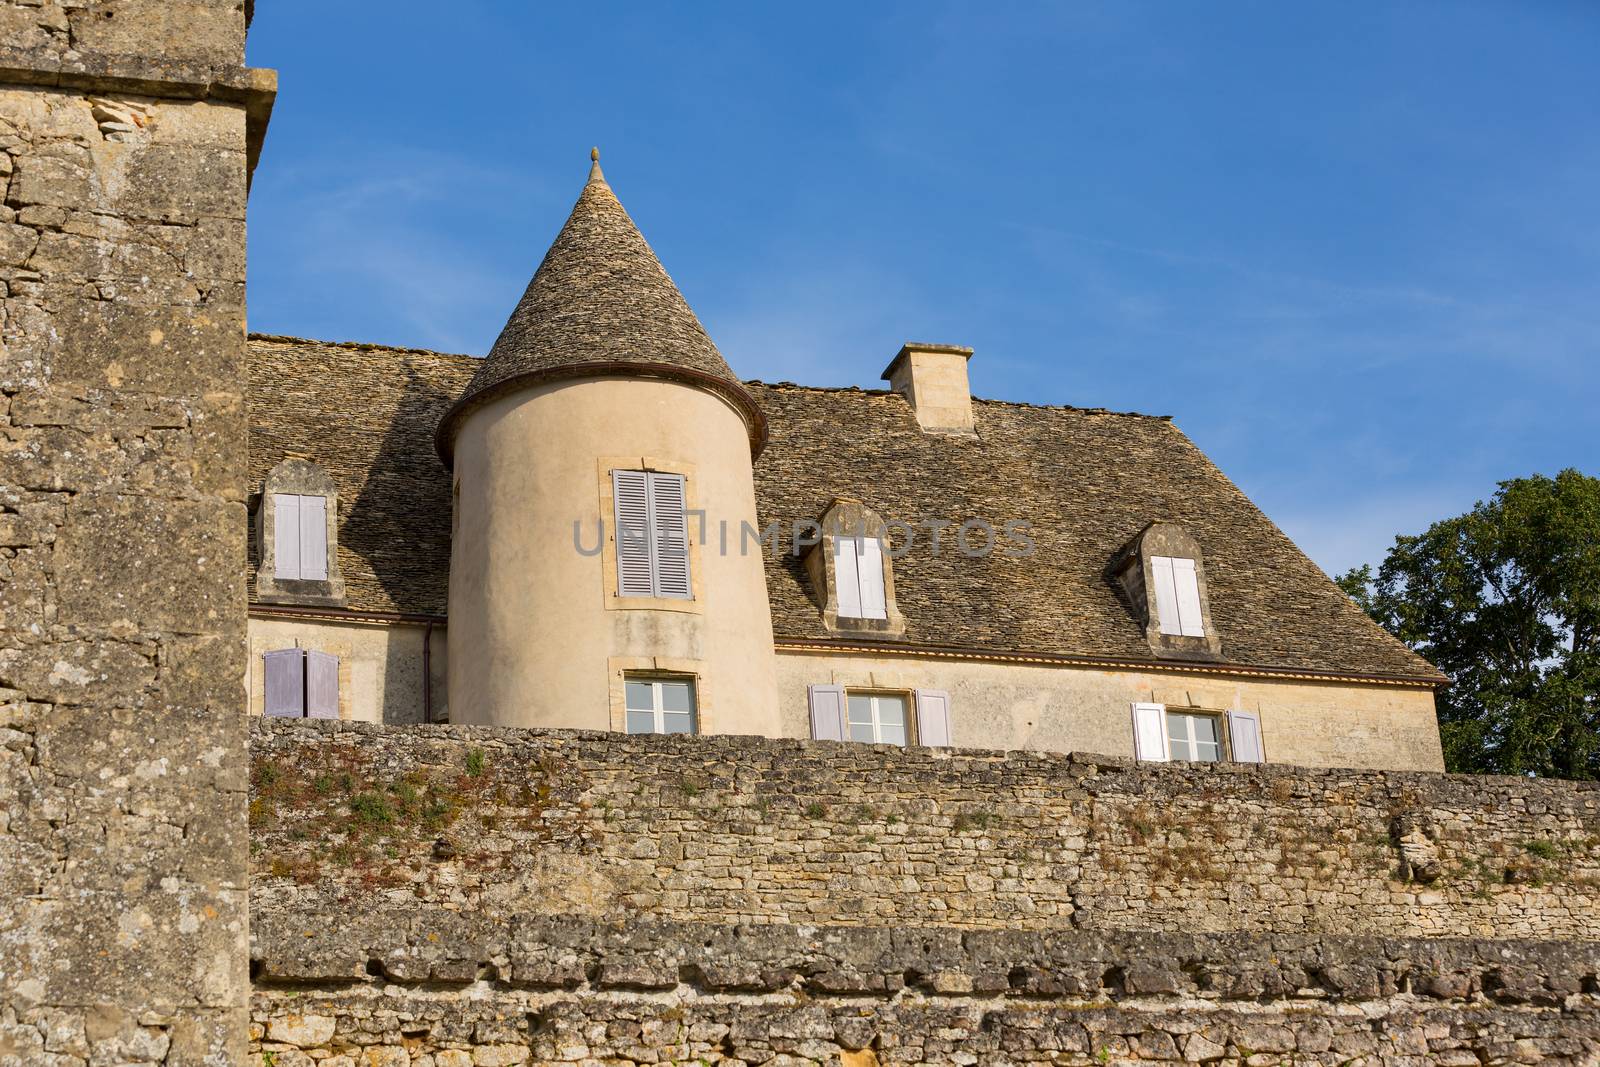 Dordogne, France: The Castle of the gardens of the Jardins de Marqueyssac in the Dordogne region of France